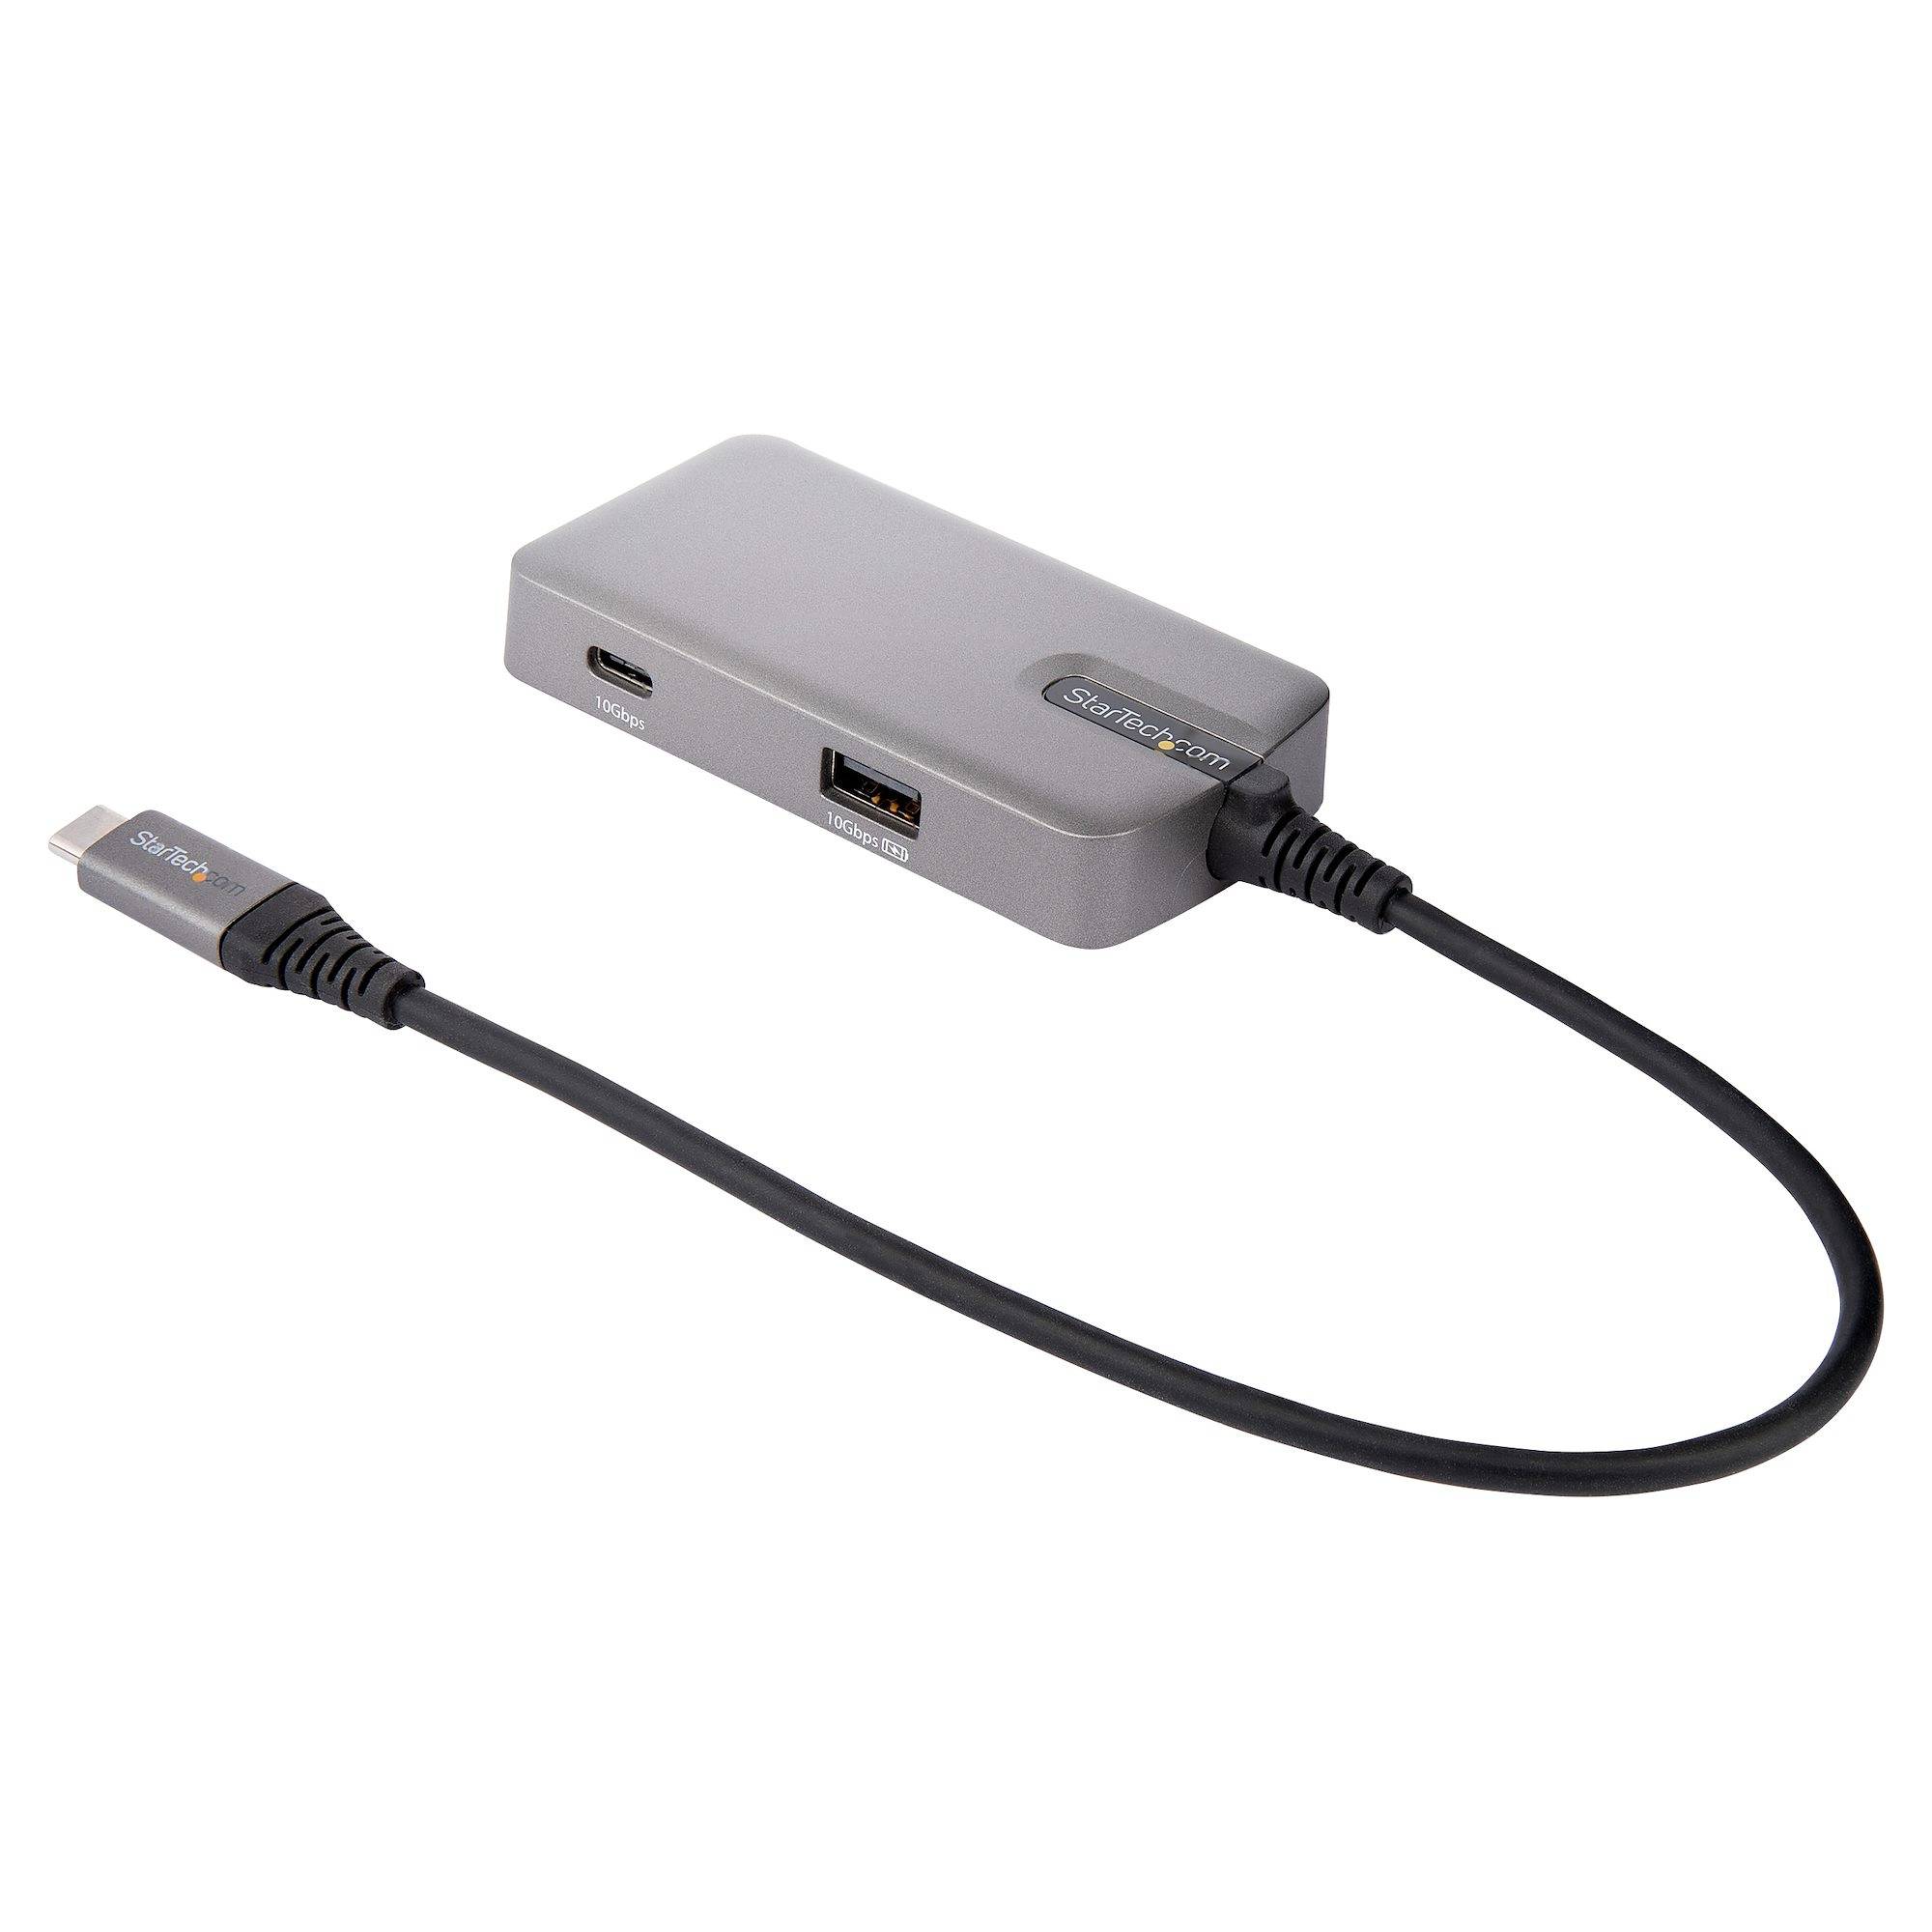 Rca Informatique - Image du produit : ADAPTATEUR MULTIPORT USB-C MINI DOCK USB TYPE-C VERS HDMI 2.0